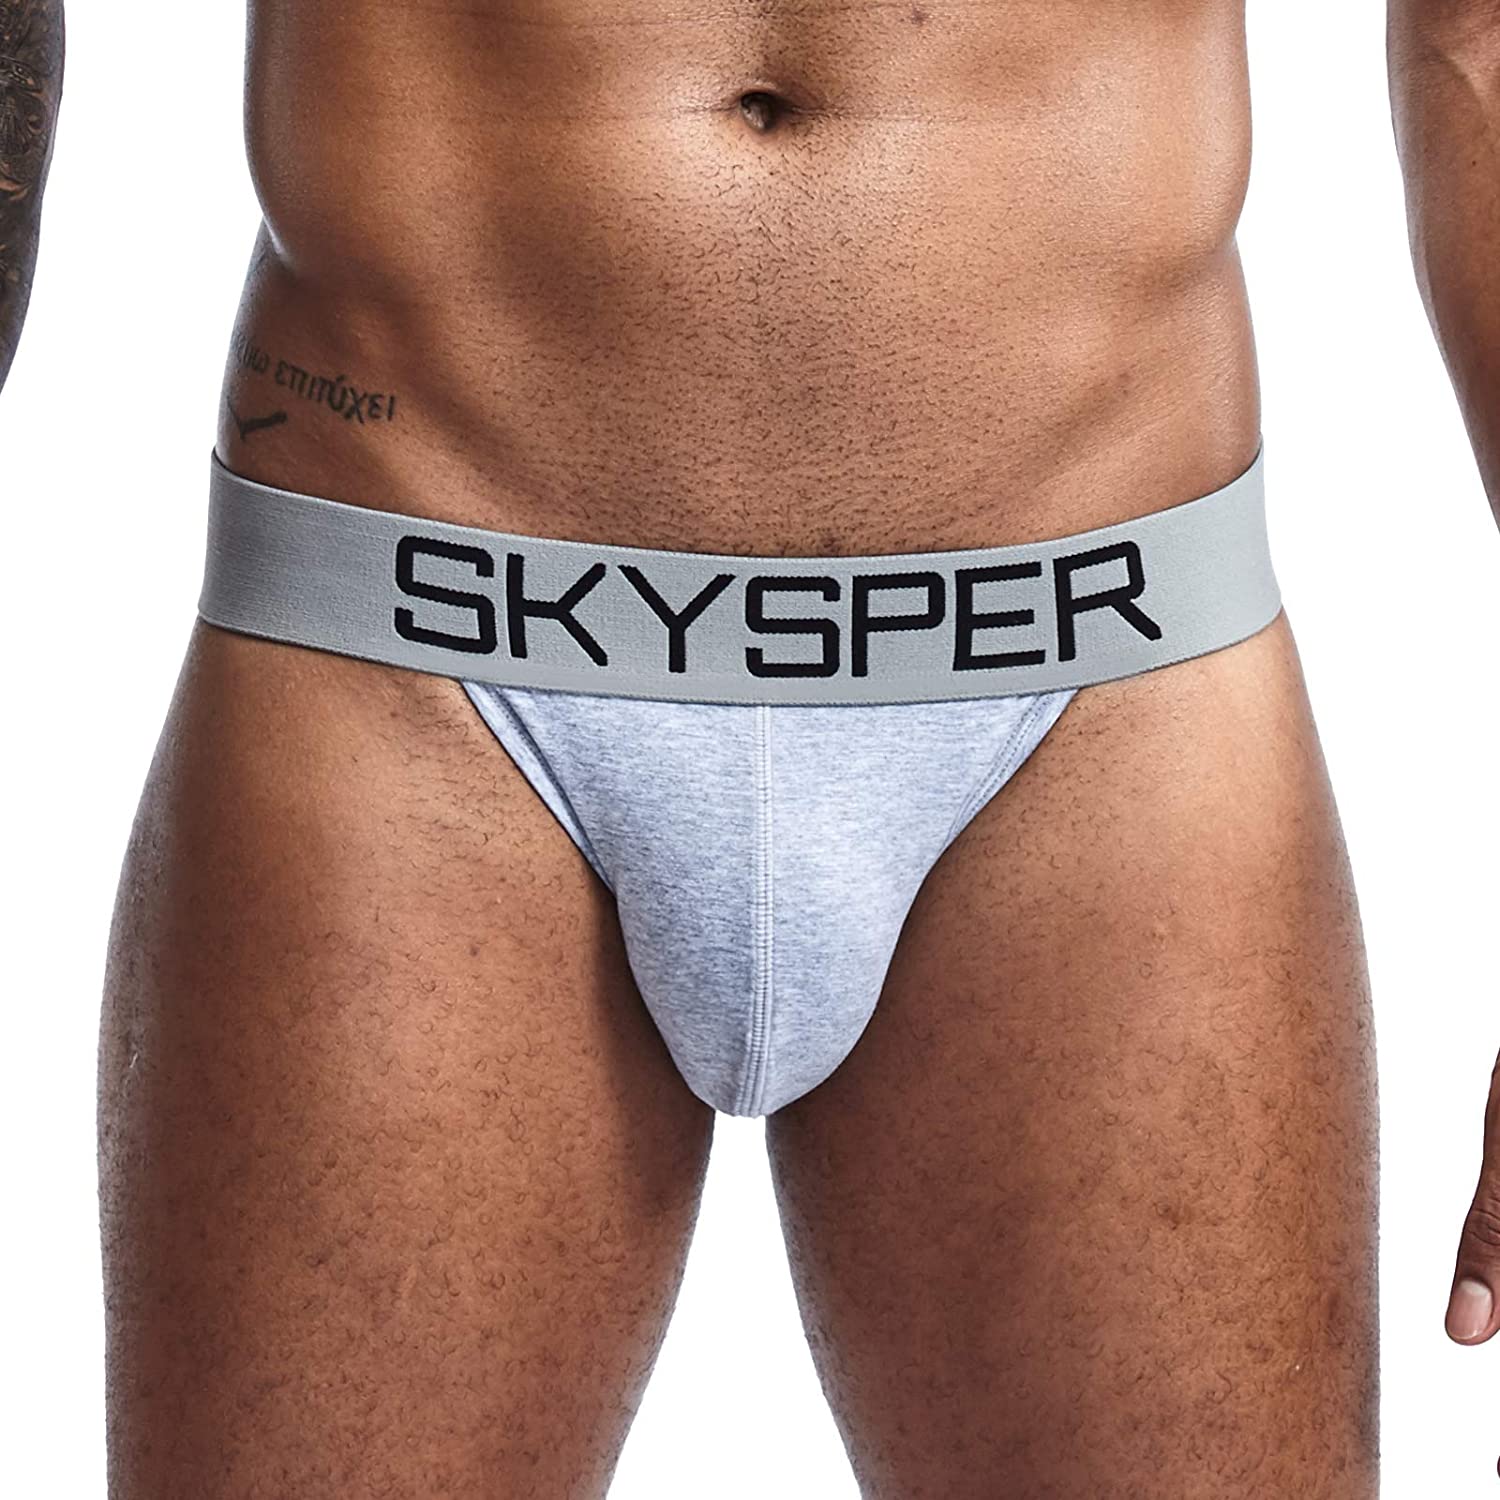 SKYSPER Men's Jockstrap Breathable Mesh Cotton Jock Straps Male Underwear Athletic Supporters for Men 